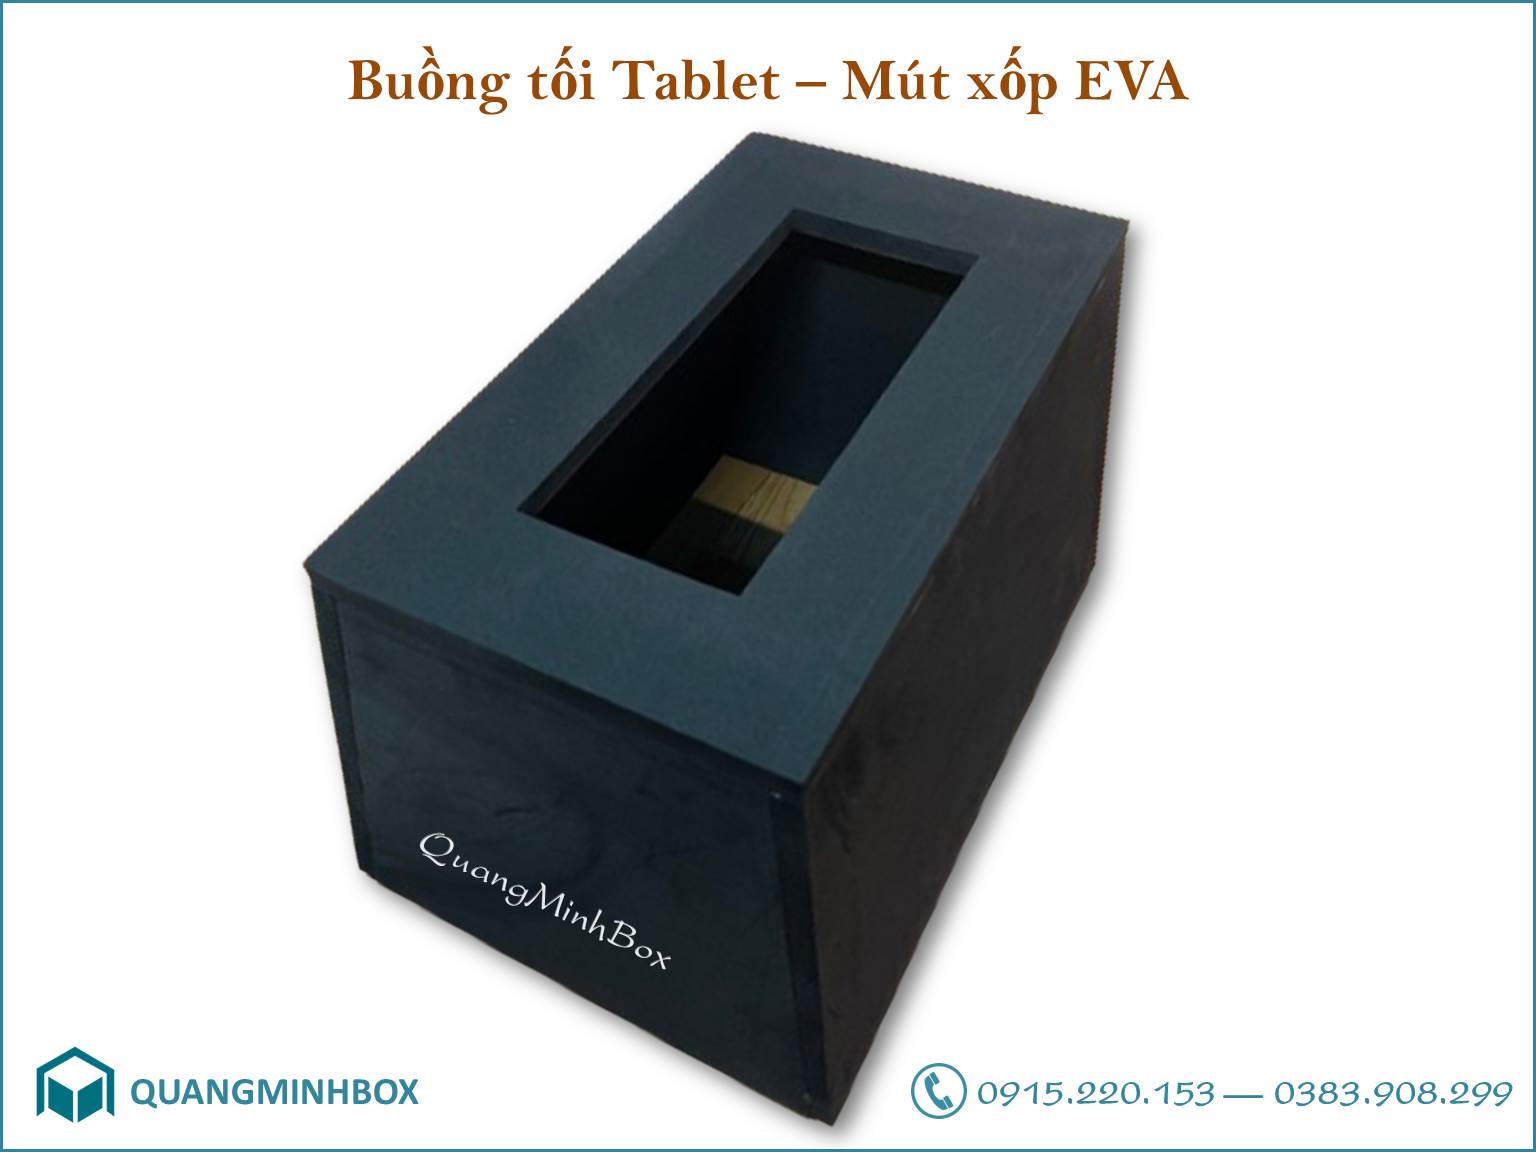 xop-eva-dung-lam-buong-toi-tablet